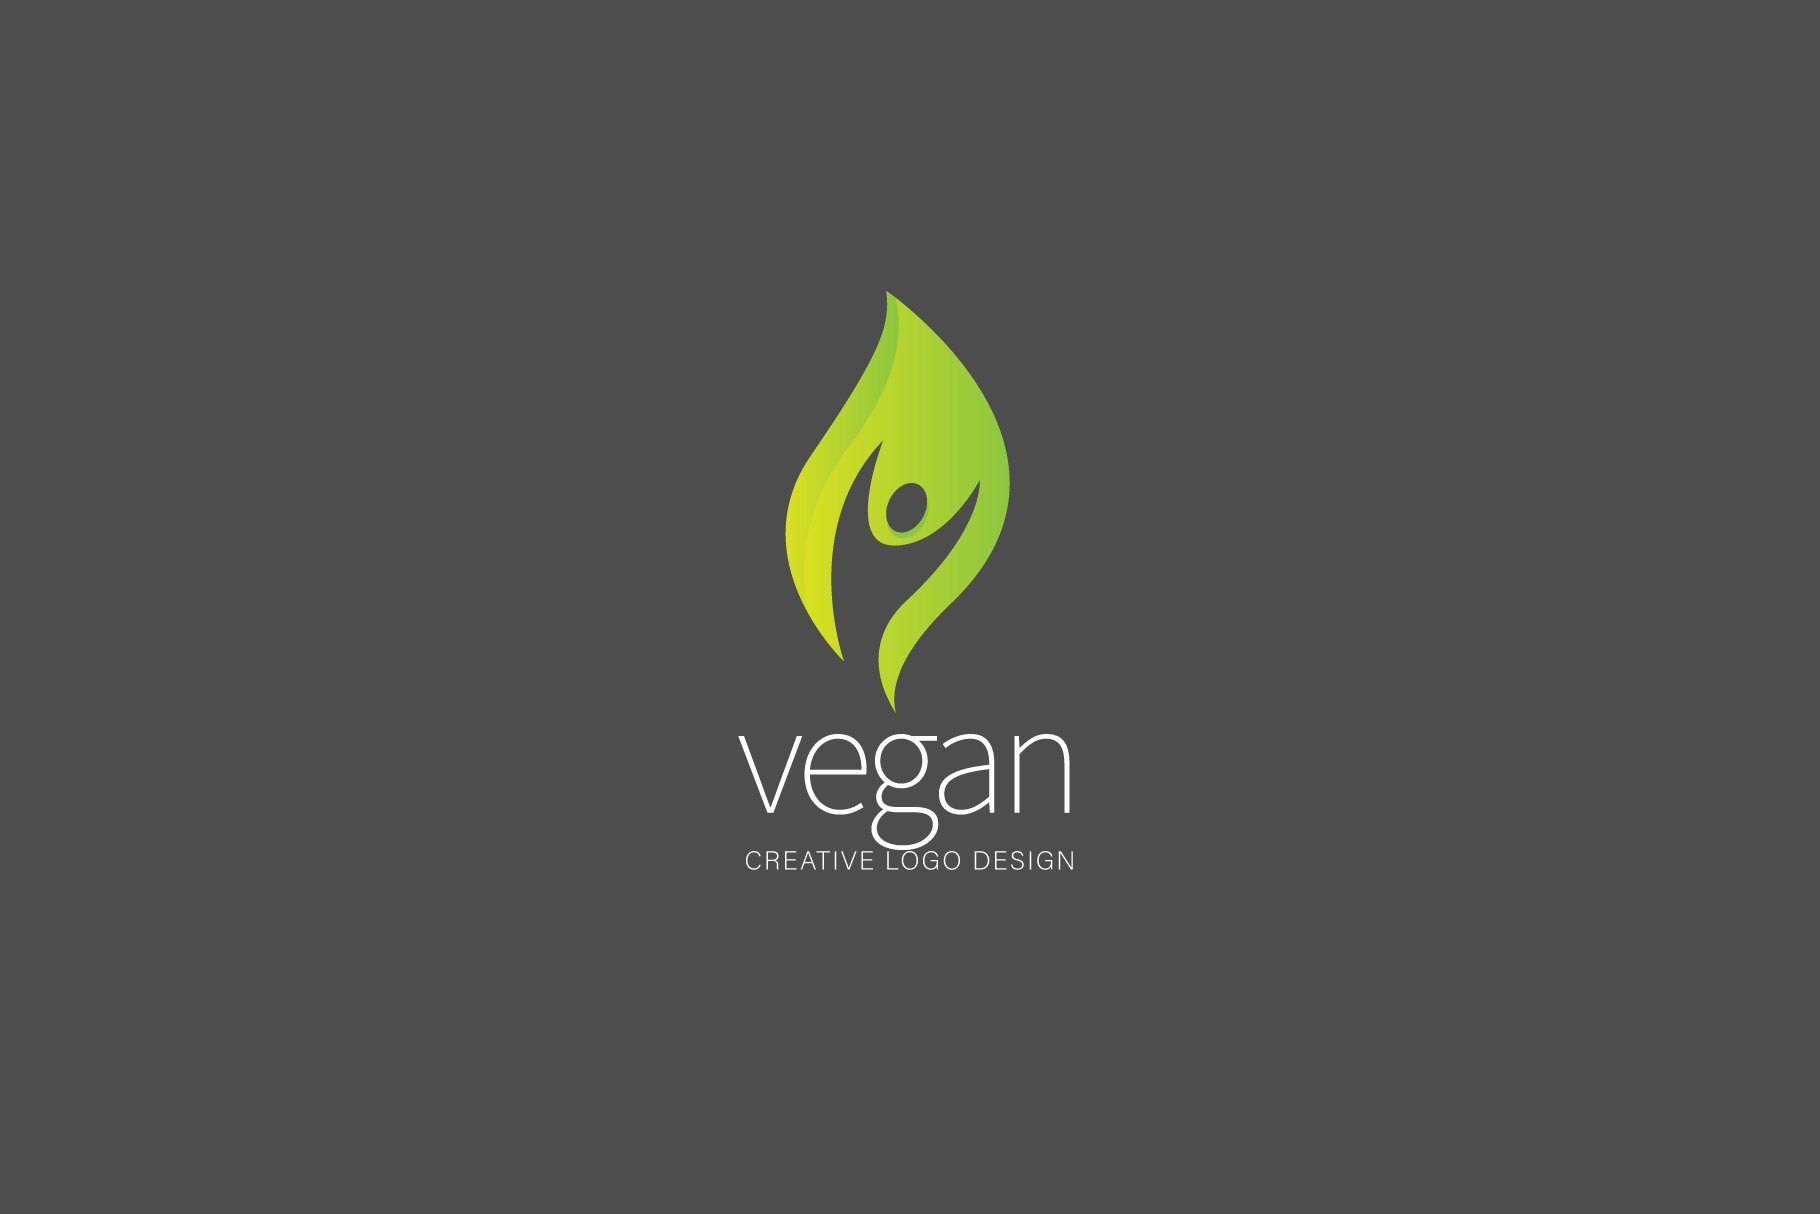 veganlogo blrek 370